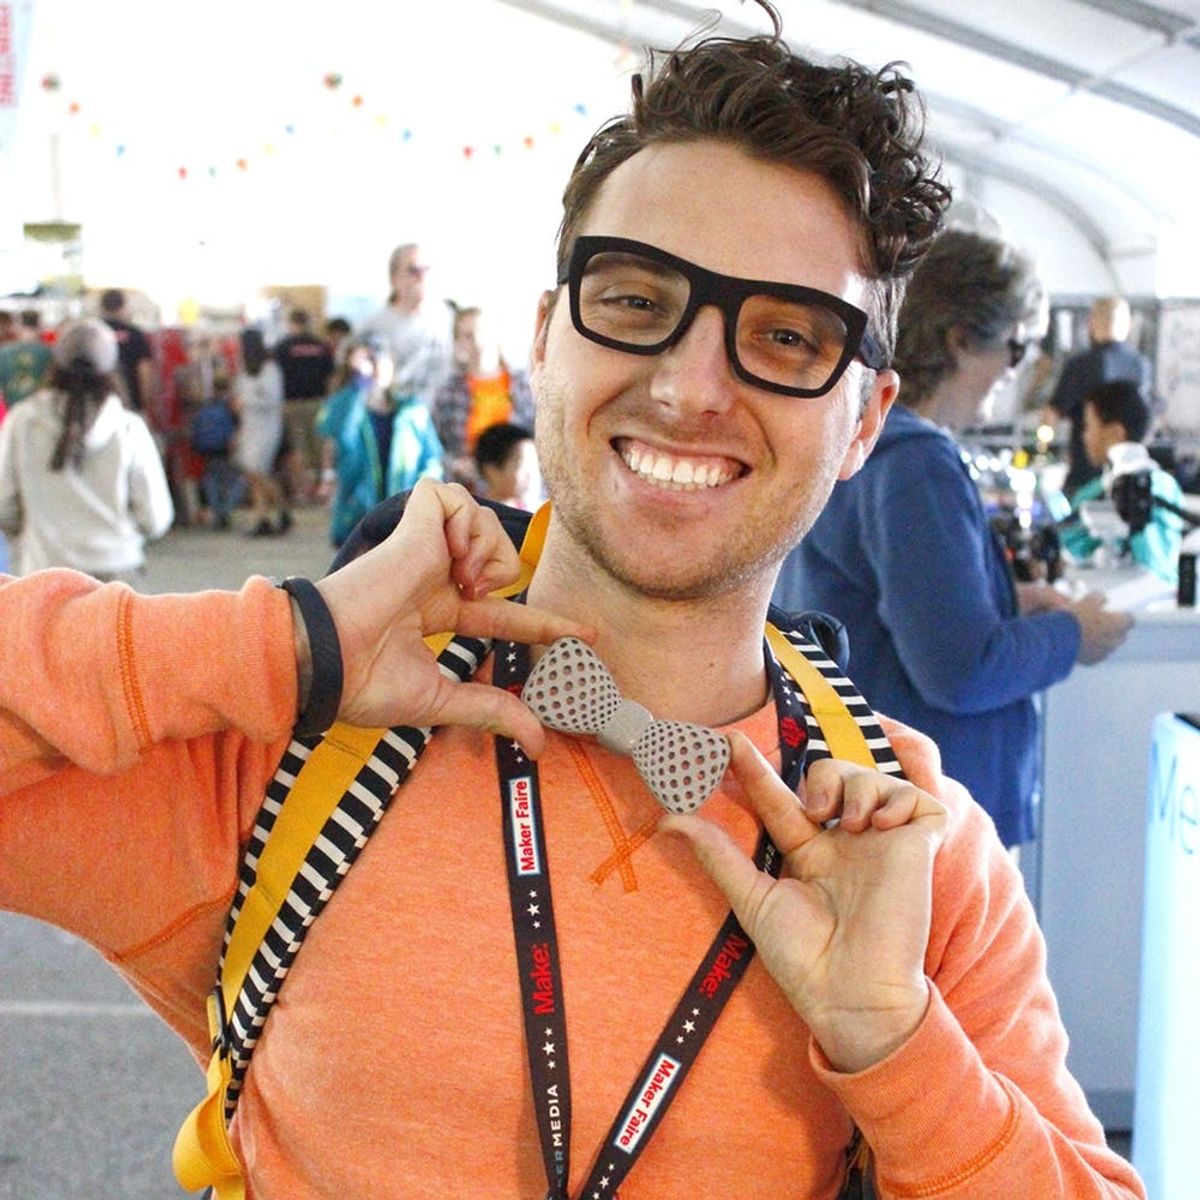 The Coolest, Weirdest, Wackiest Things at Maker Faire 2015